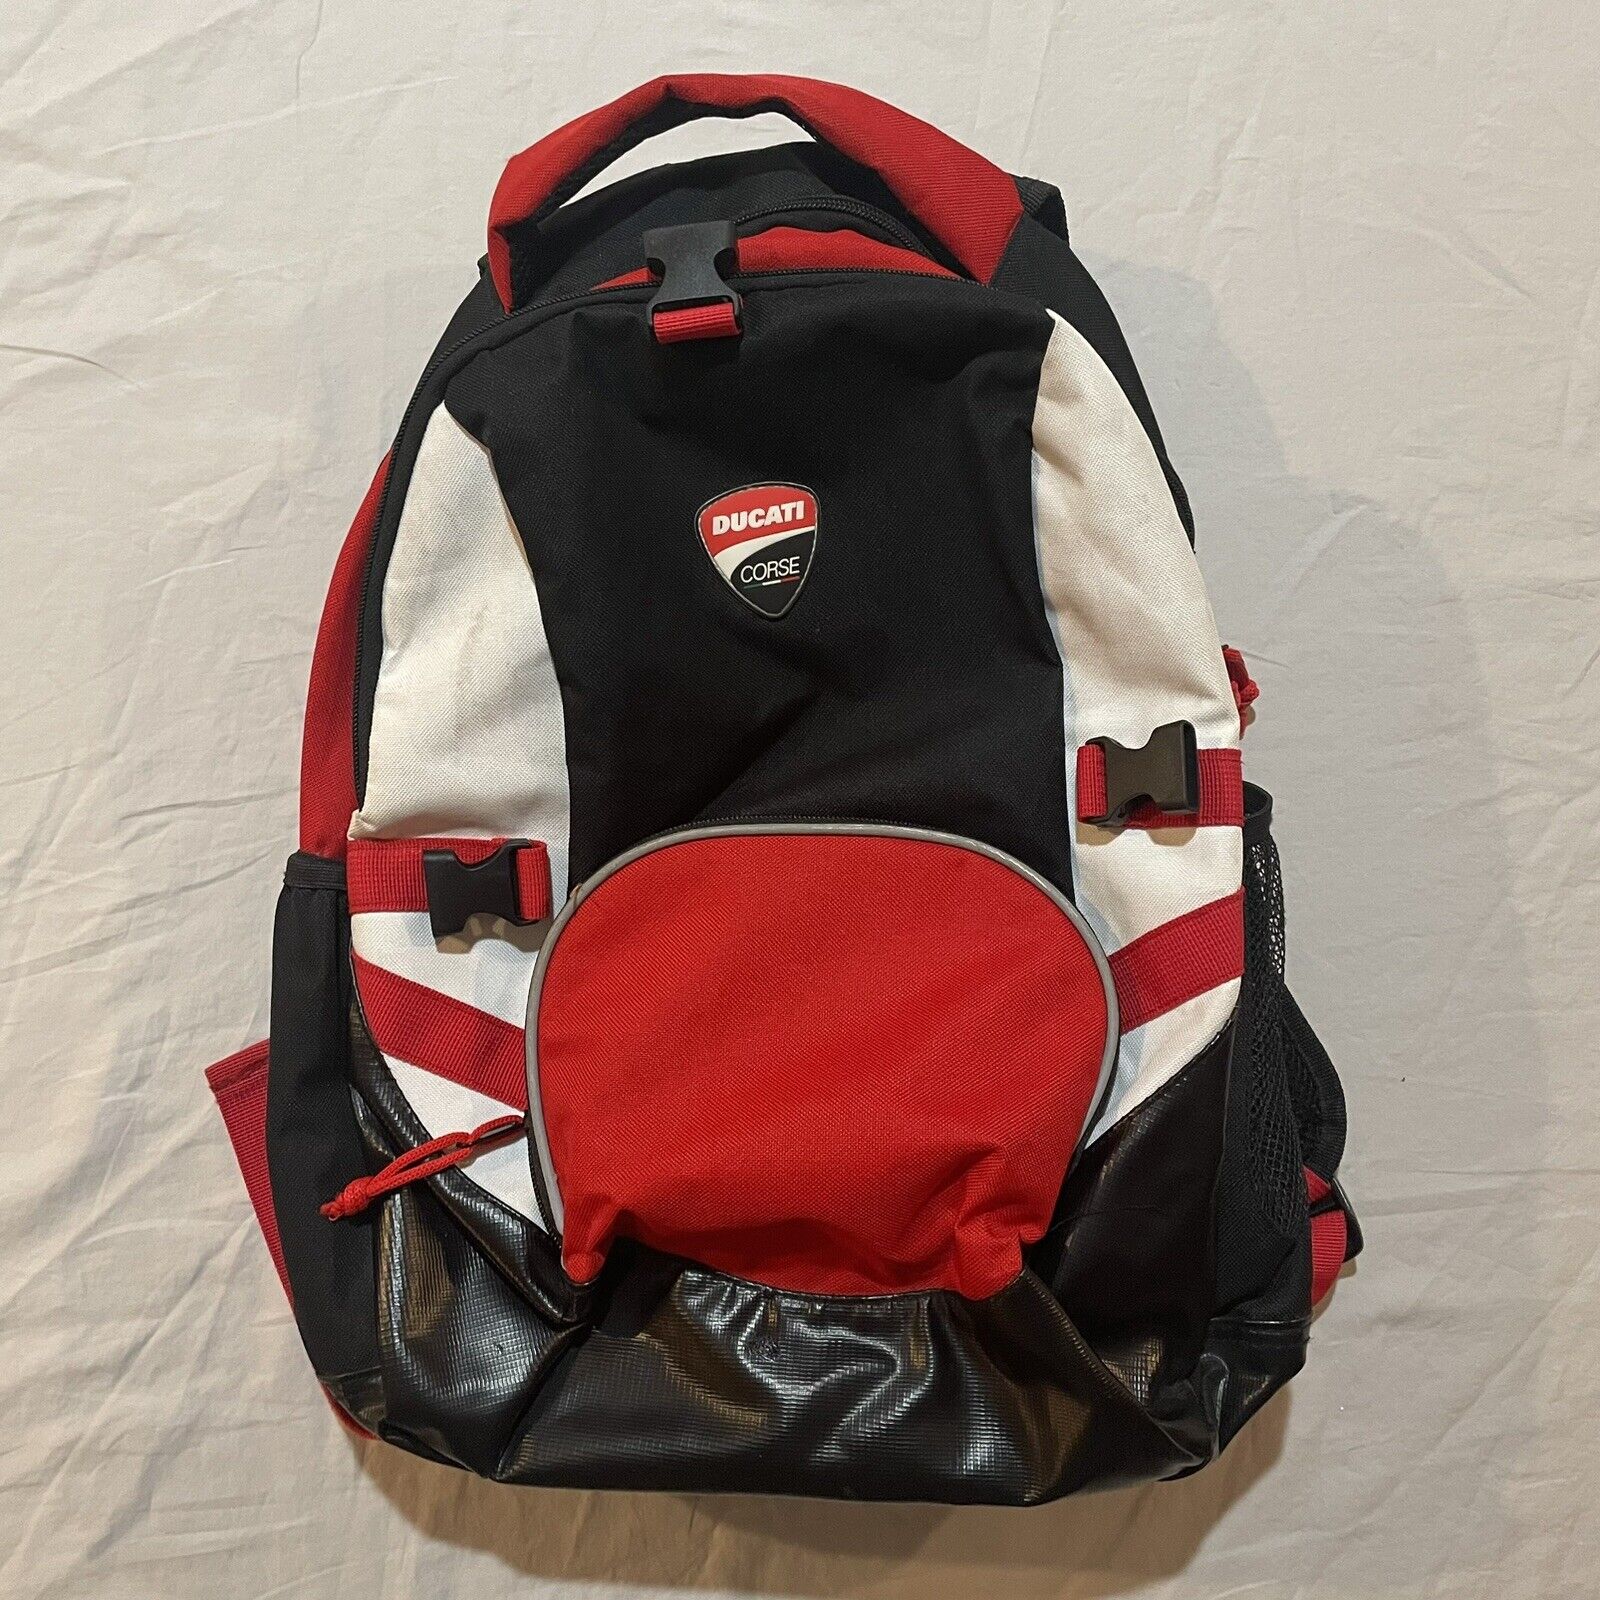 Ducati Corse Backpack Rucksack with Helmet Holder Red Black